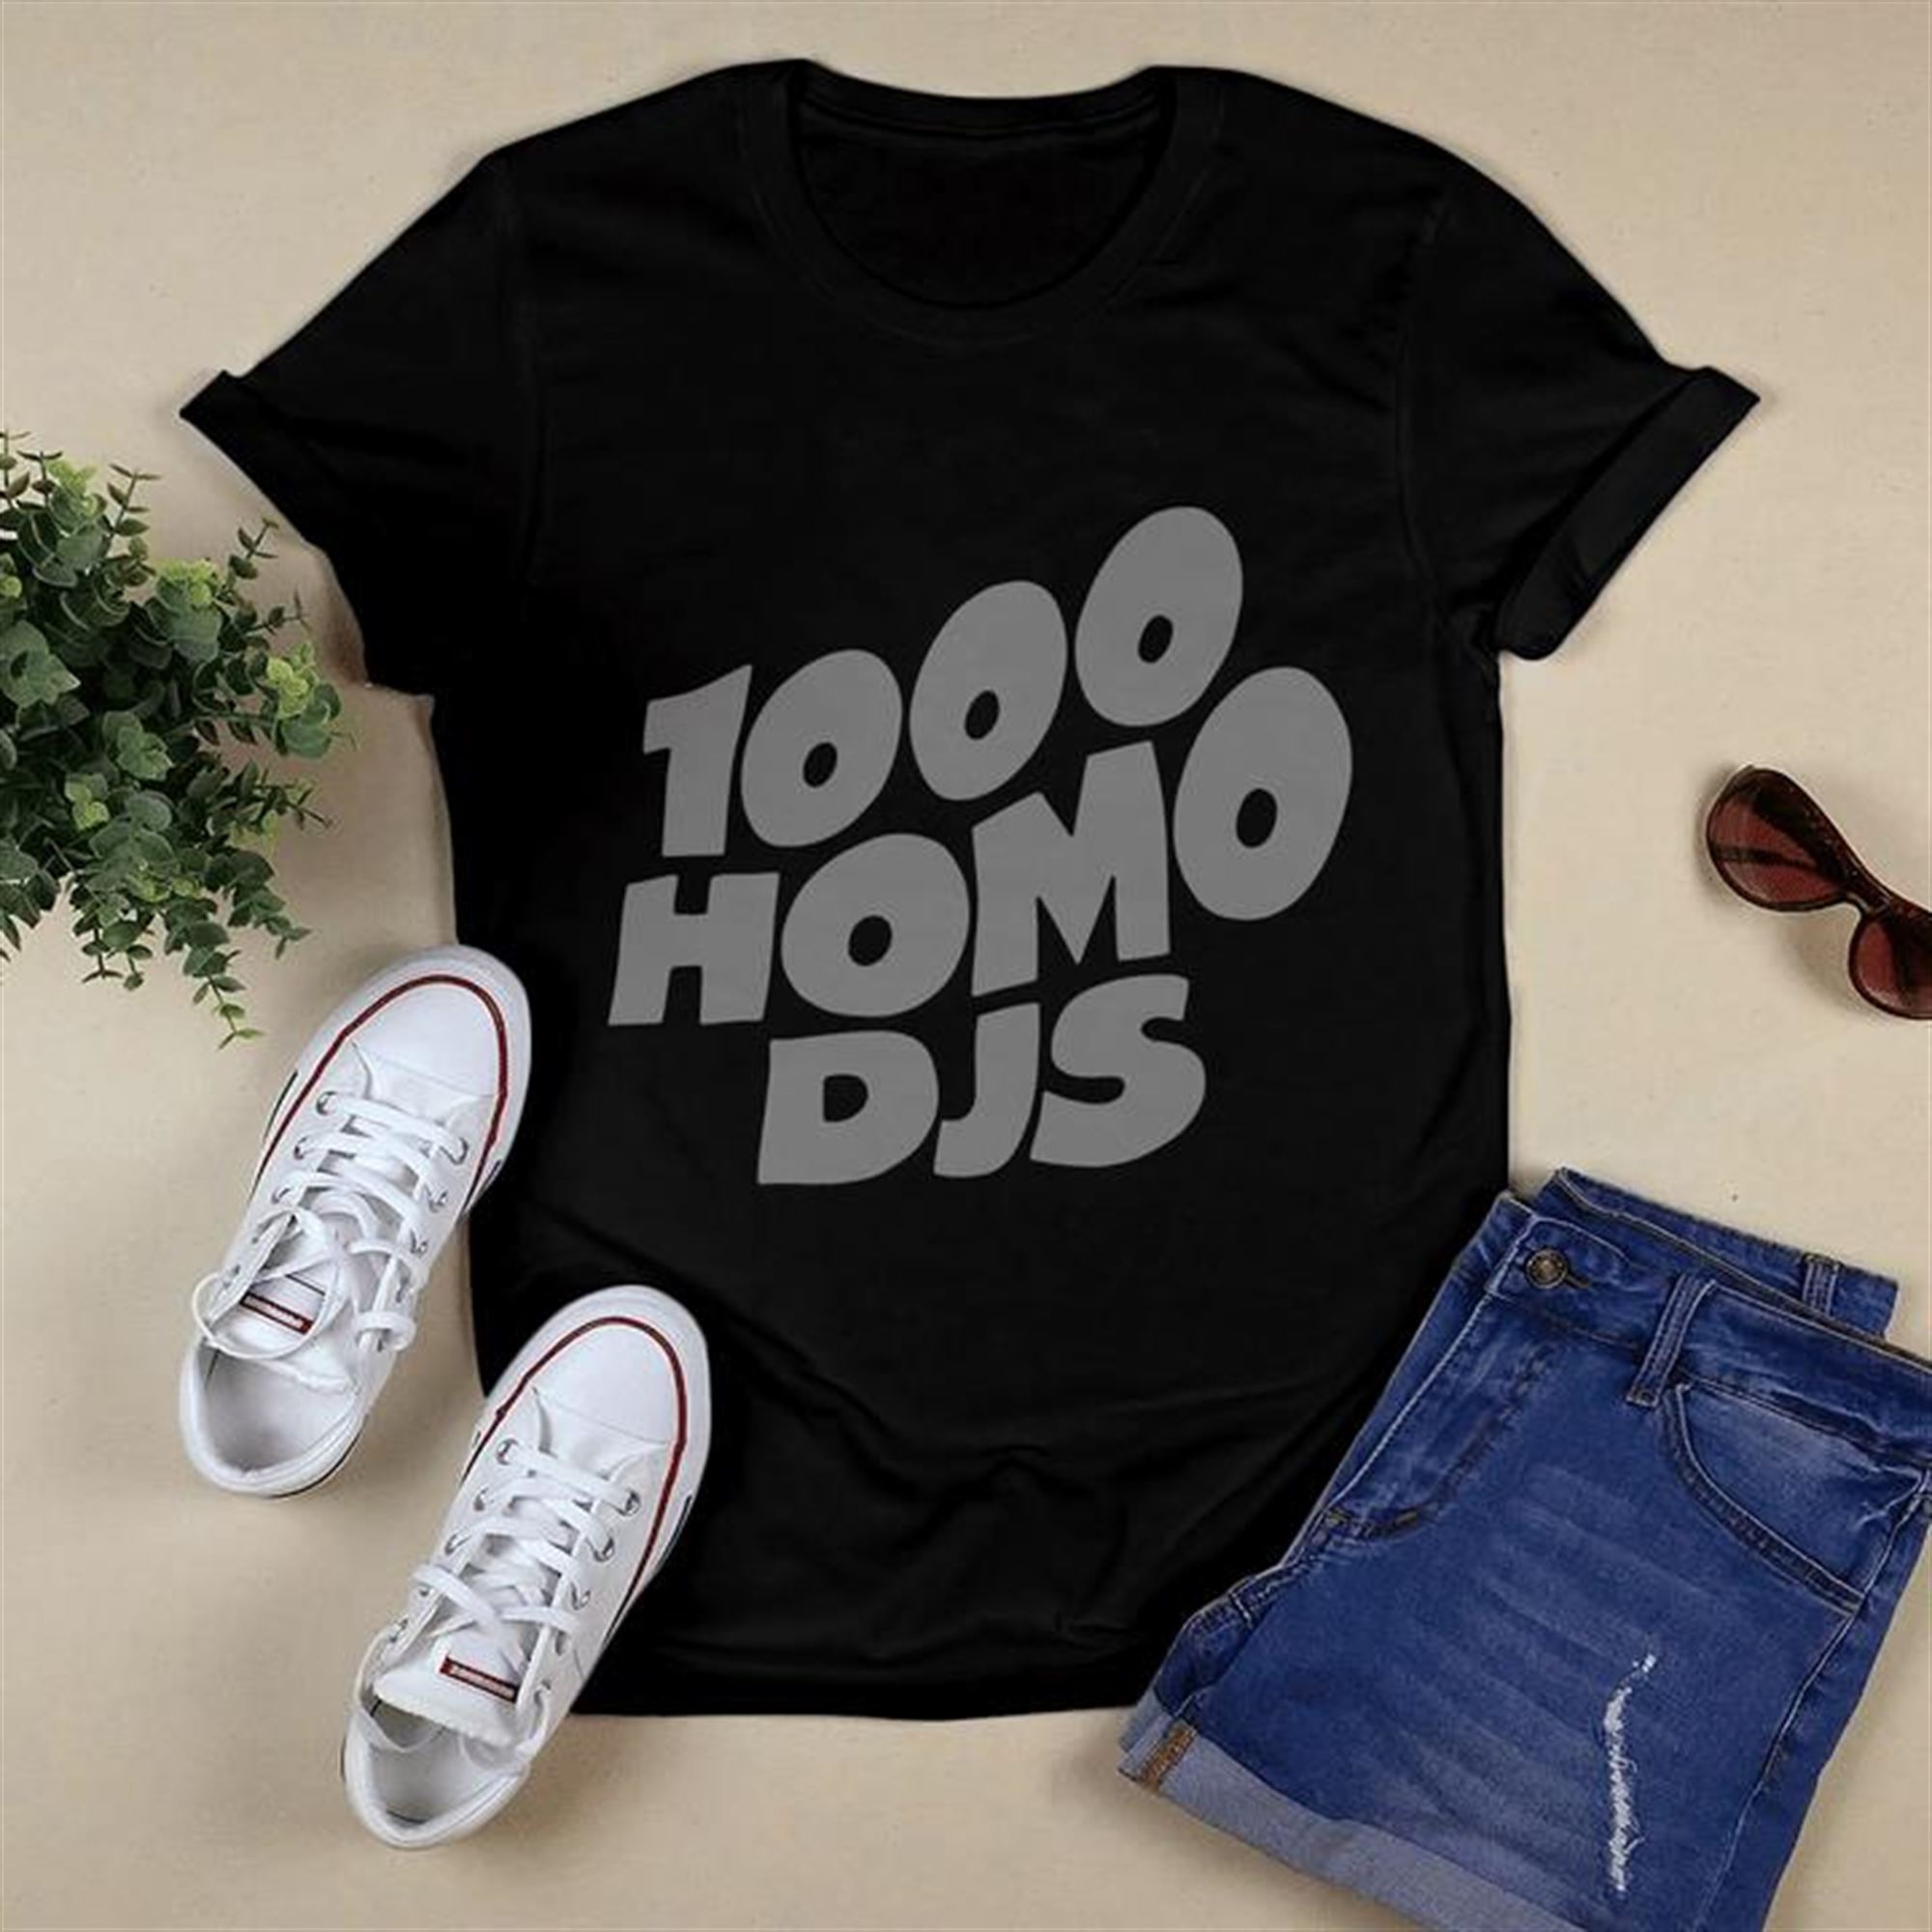 1000 Homo Djs T-shirt Plus Size Up To 5x